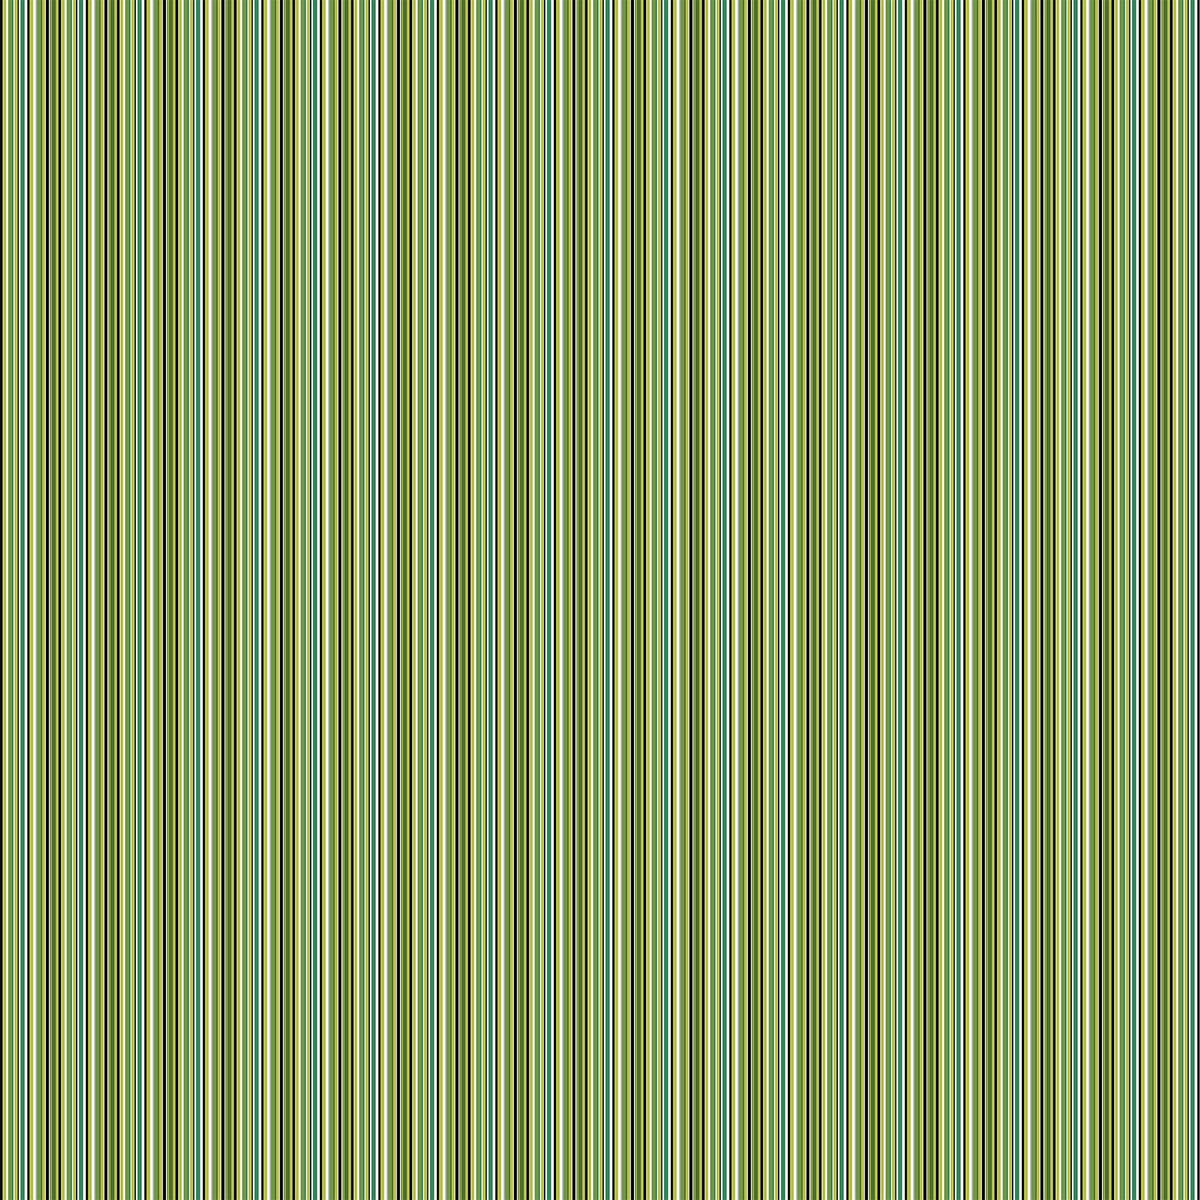 Avocado Love Quilt Fabric - Barcode Stripe in White/Multi - 24597-10